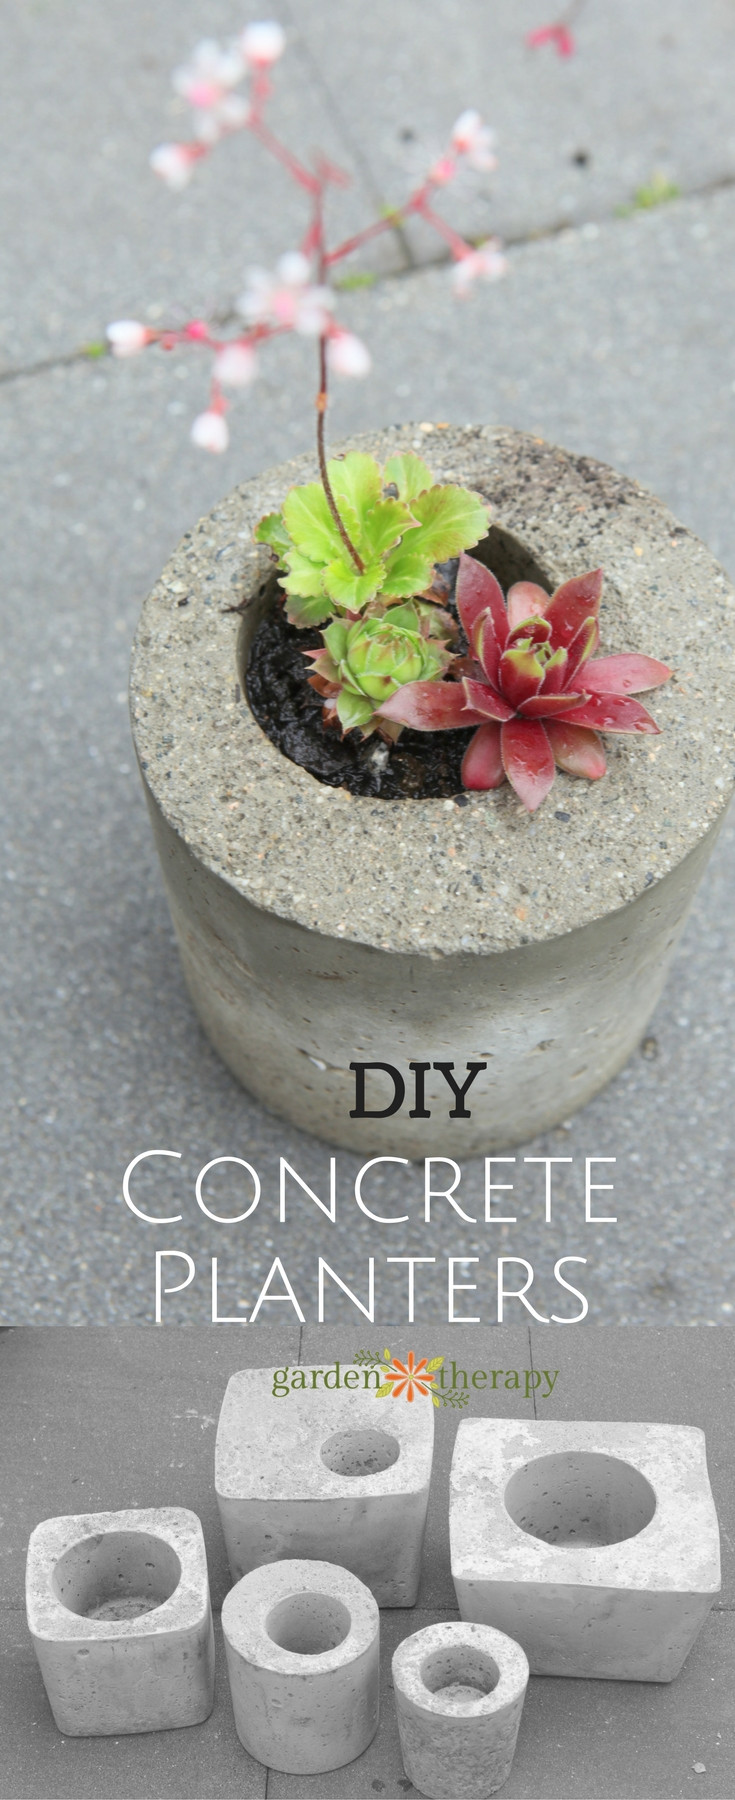 DIY Outdoor Planters
 How to Make Concrete Planters